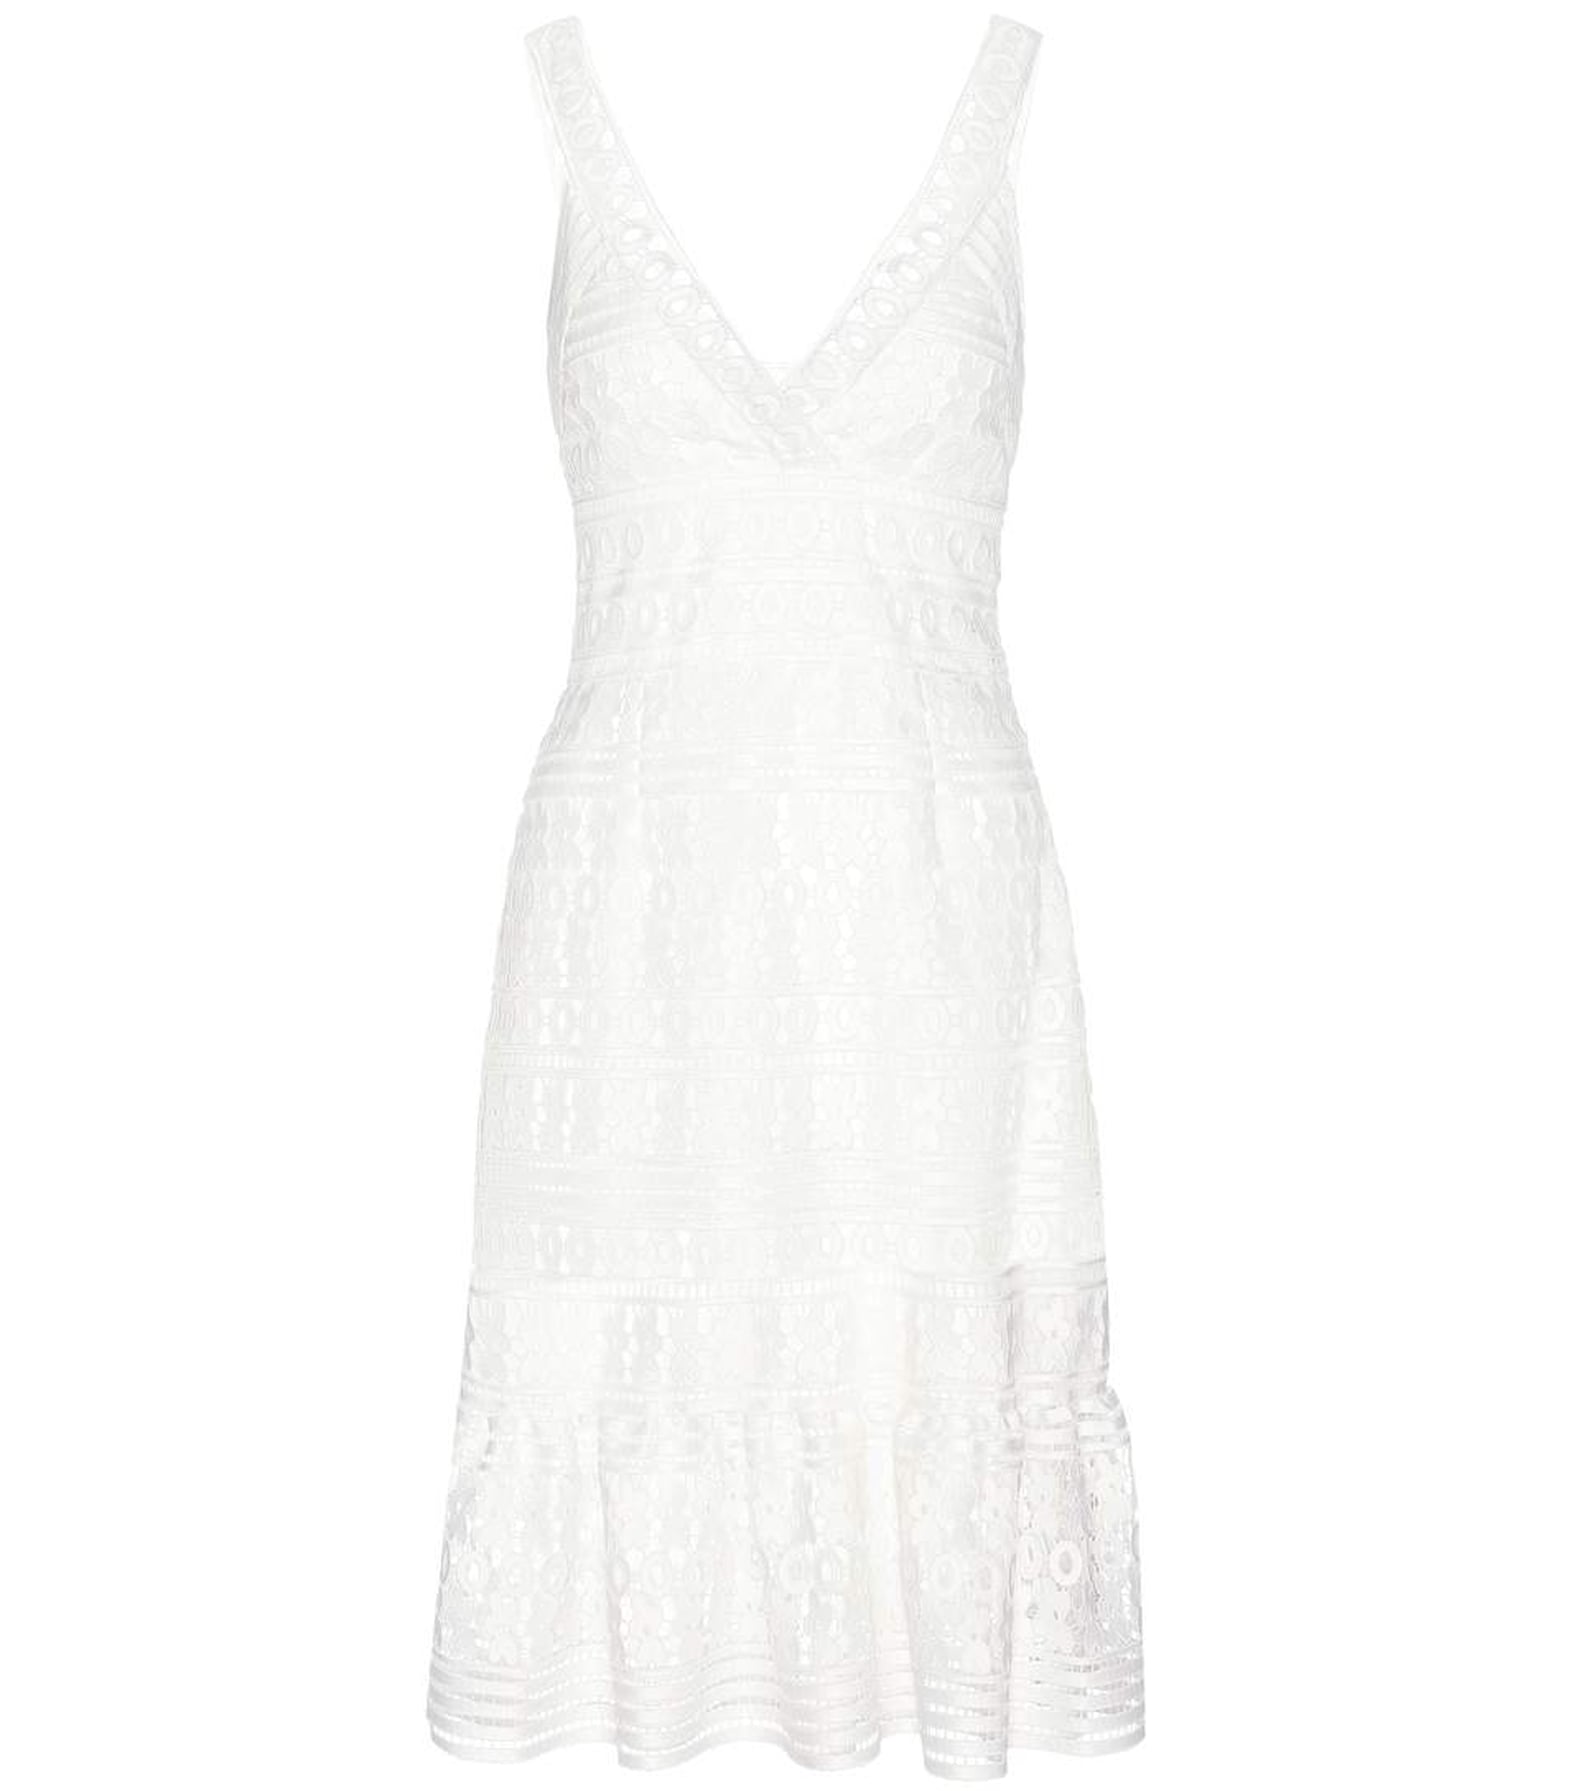 White Lace Dresses For the Summer | POPSUGAR Fashion